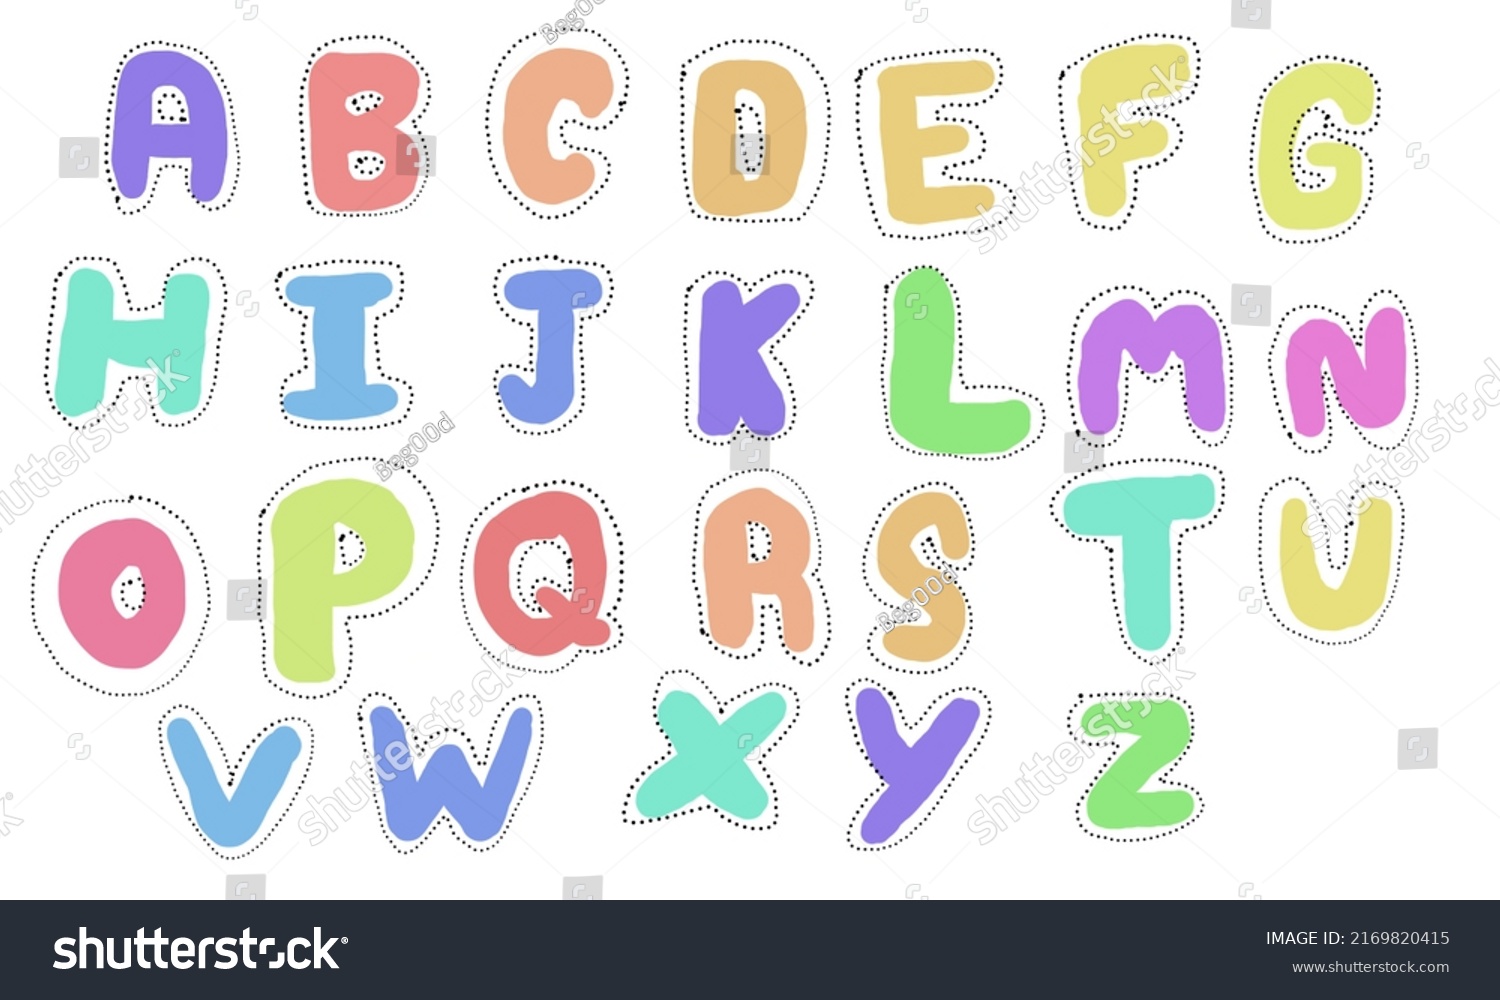 Abc Alphaber Setcolorful Hand Draw Letters Stock Illustration ...